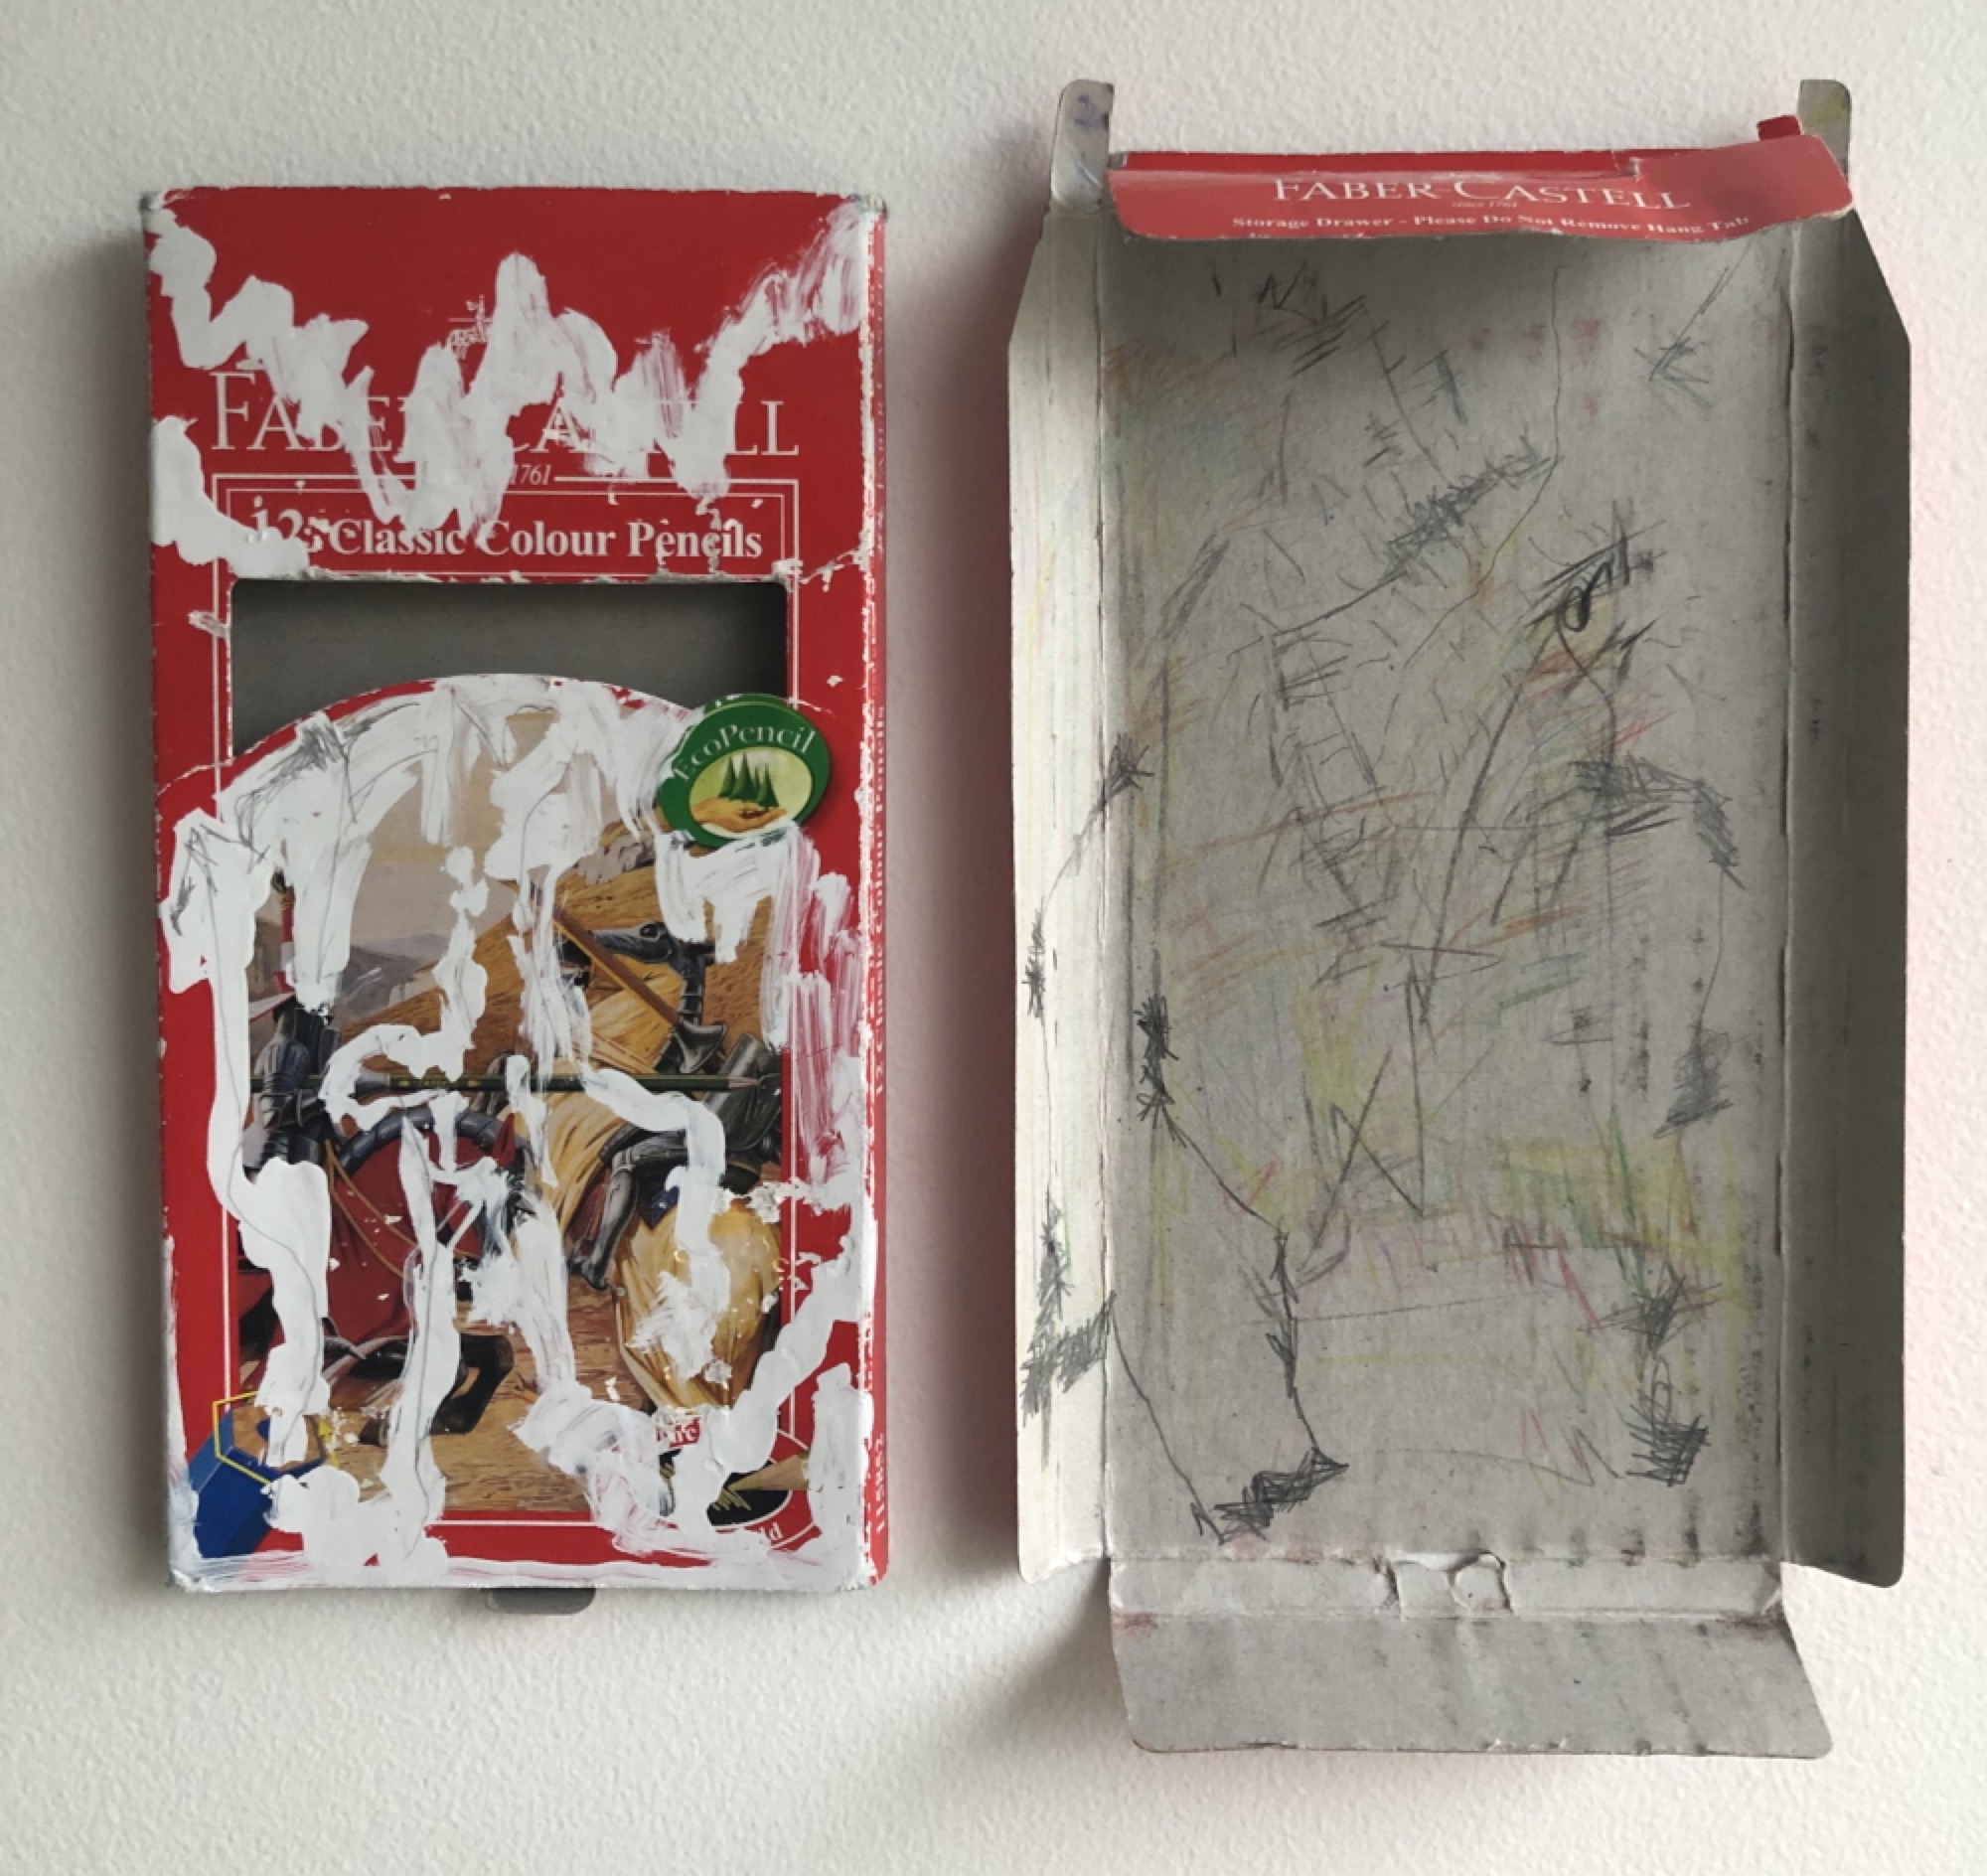 Marcus Payne, <em>Faber Castell</em>, 2020, pencil, liquid paper on Faber Castell pencil box, 9cm x 17.5cm. Courtesy of the artist.